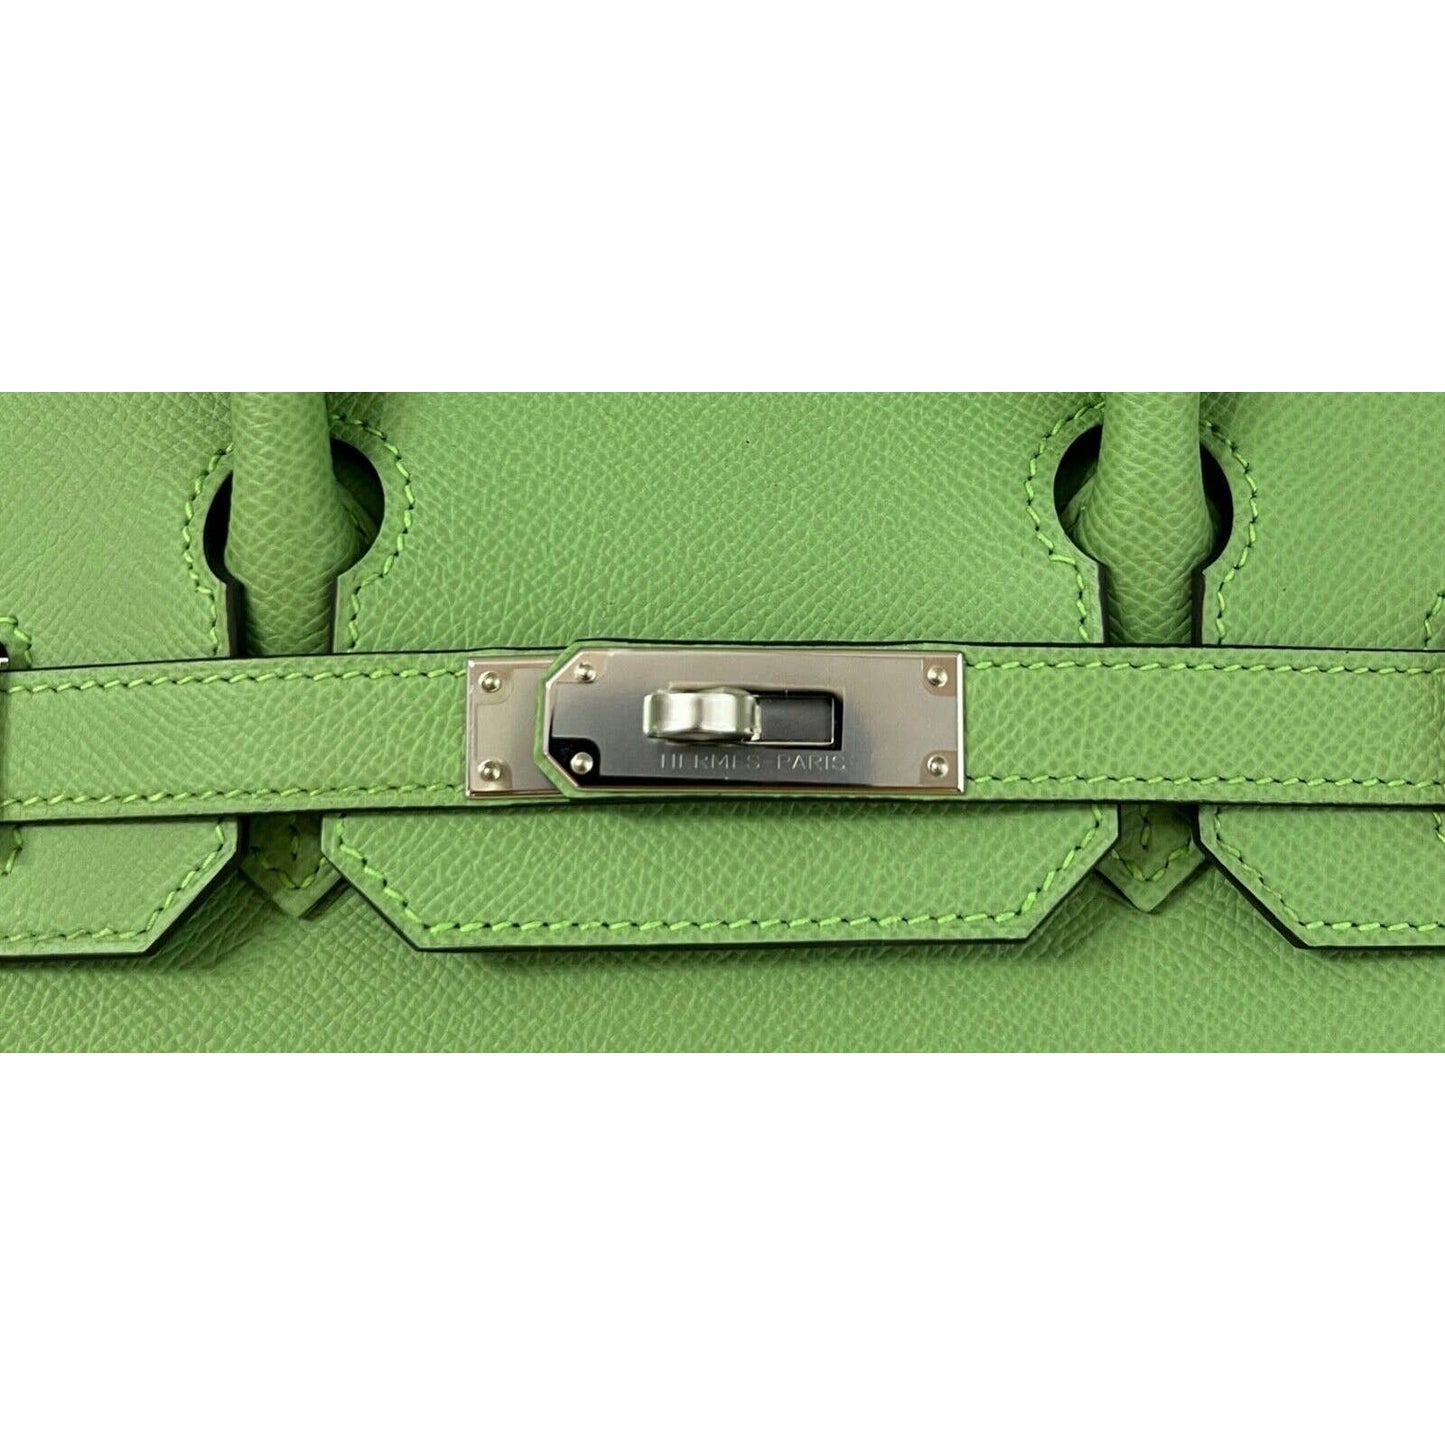 Hermes Birkin 30 Sellier Vert Criquet Green Epsom Leather Palladium Hardware